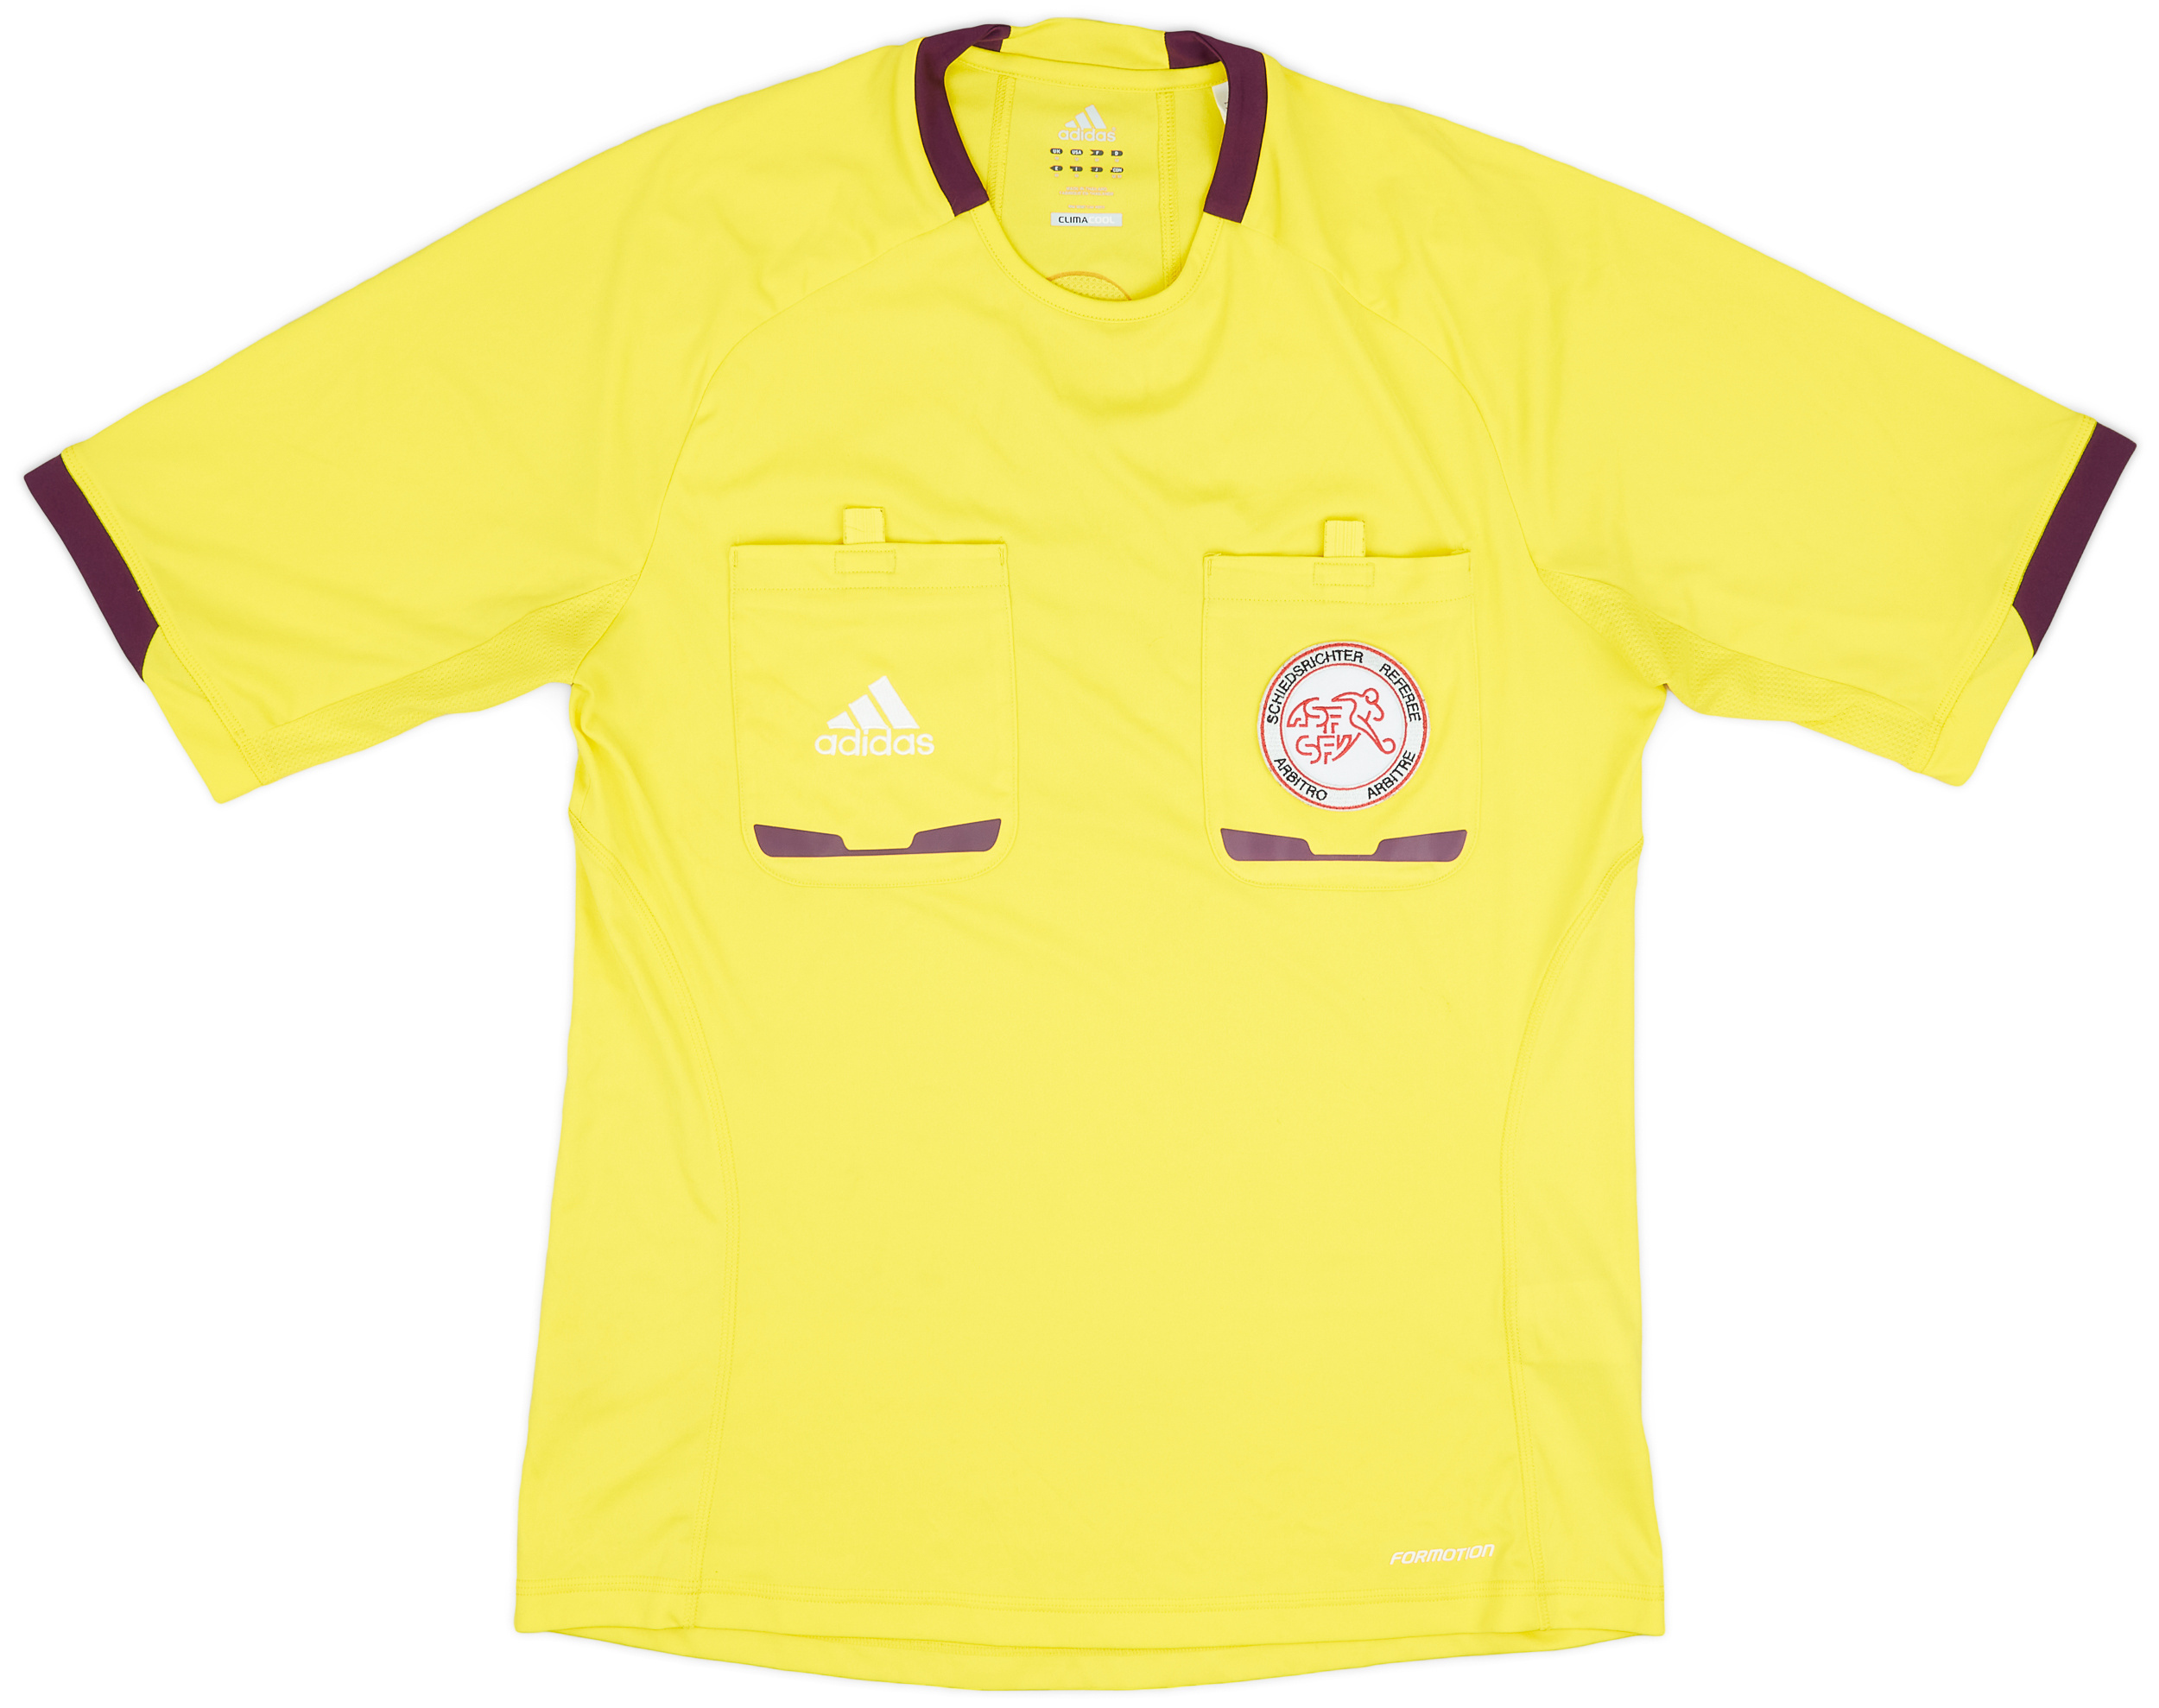 2011-12 Switzerland adidas Referee Shirt - 8/10 - ()